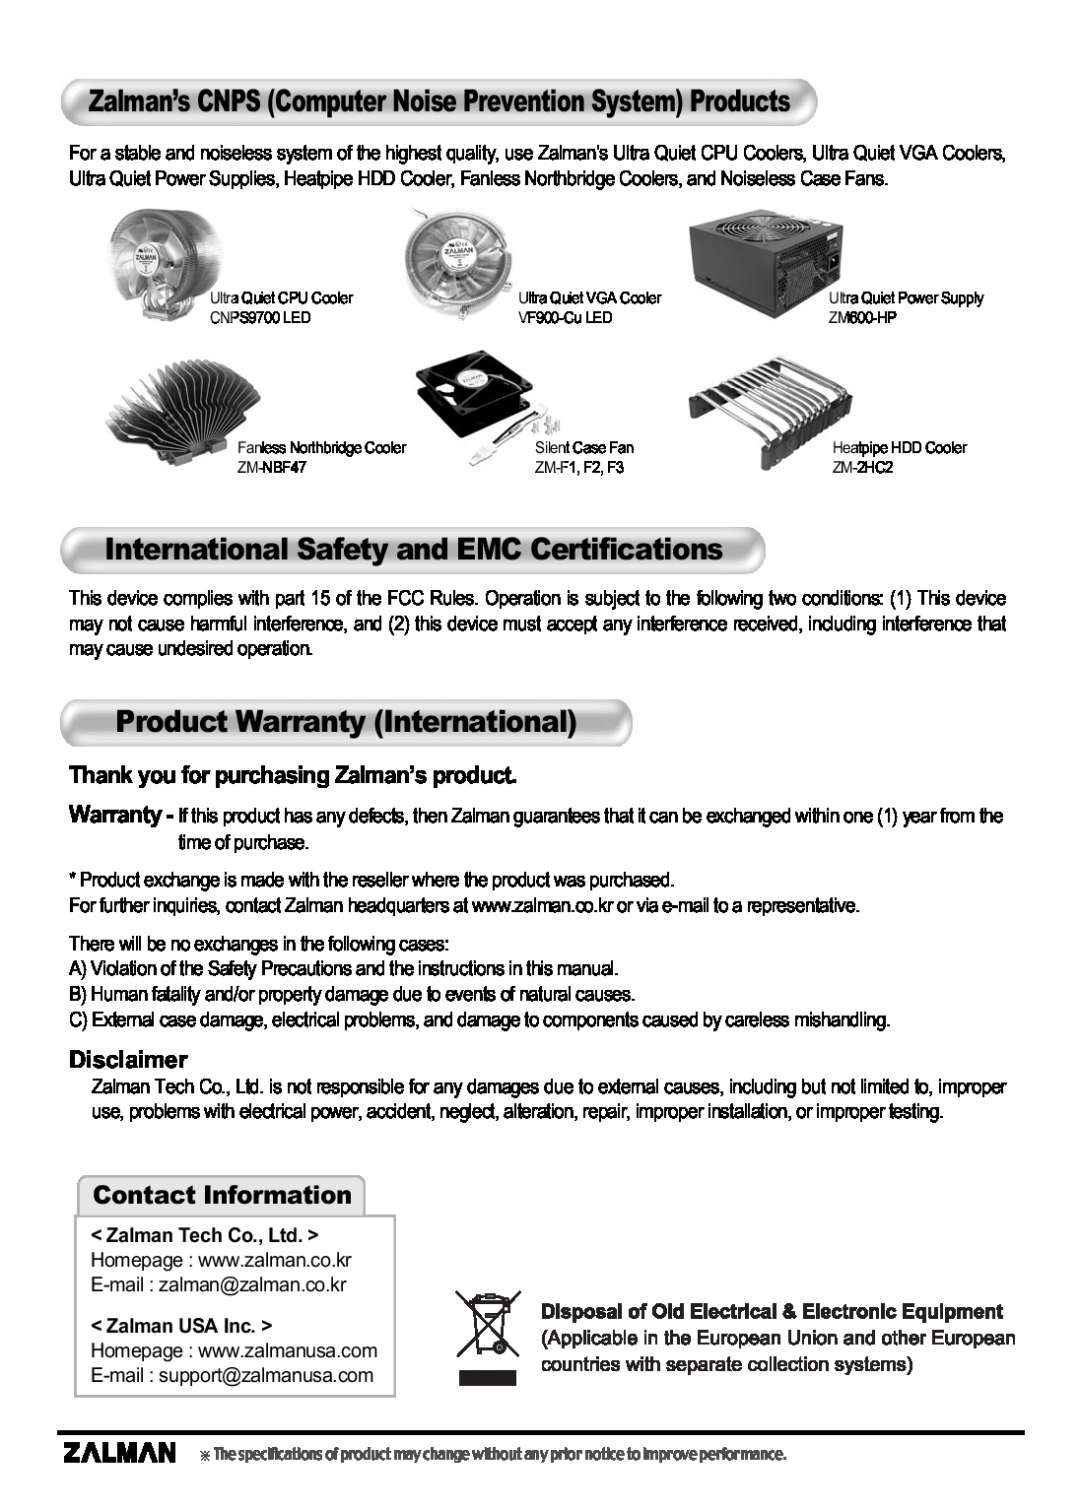 ZALMAN ZM-MFC2 International Safety and EMC Certifications, Product Warranty International, Disclaimer, Zalman USA Inc 